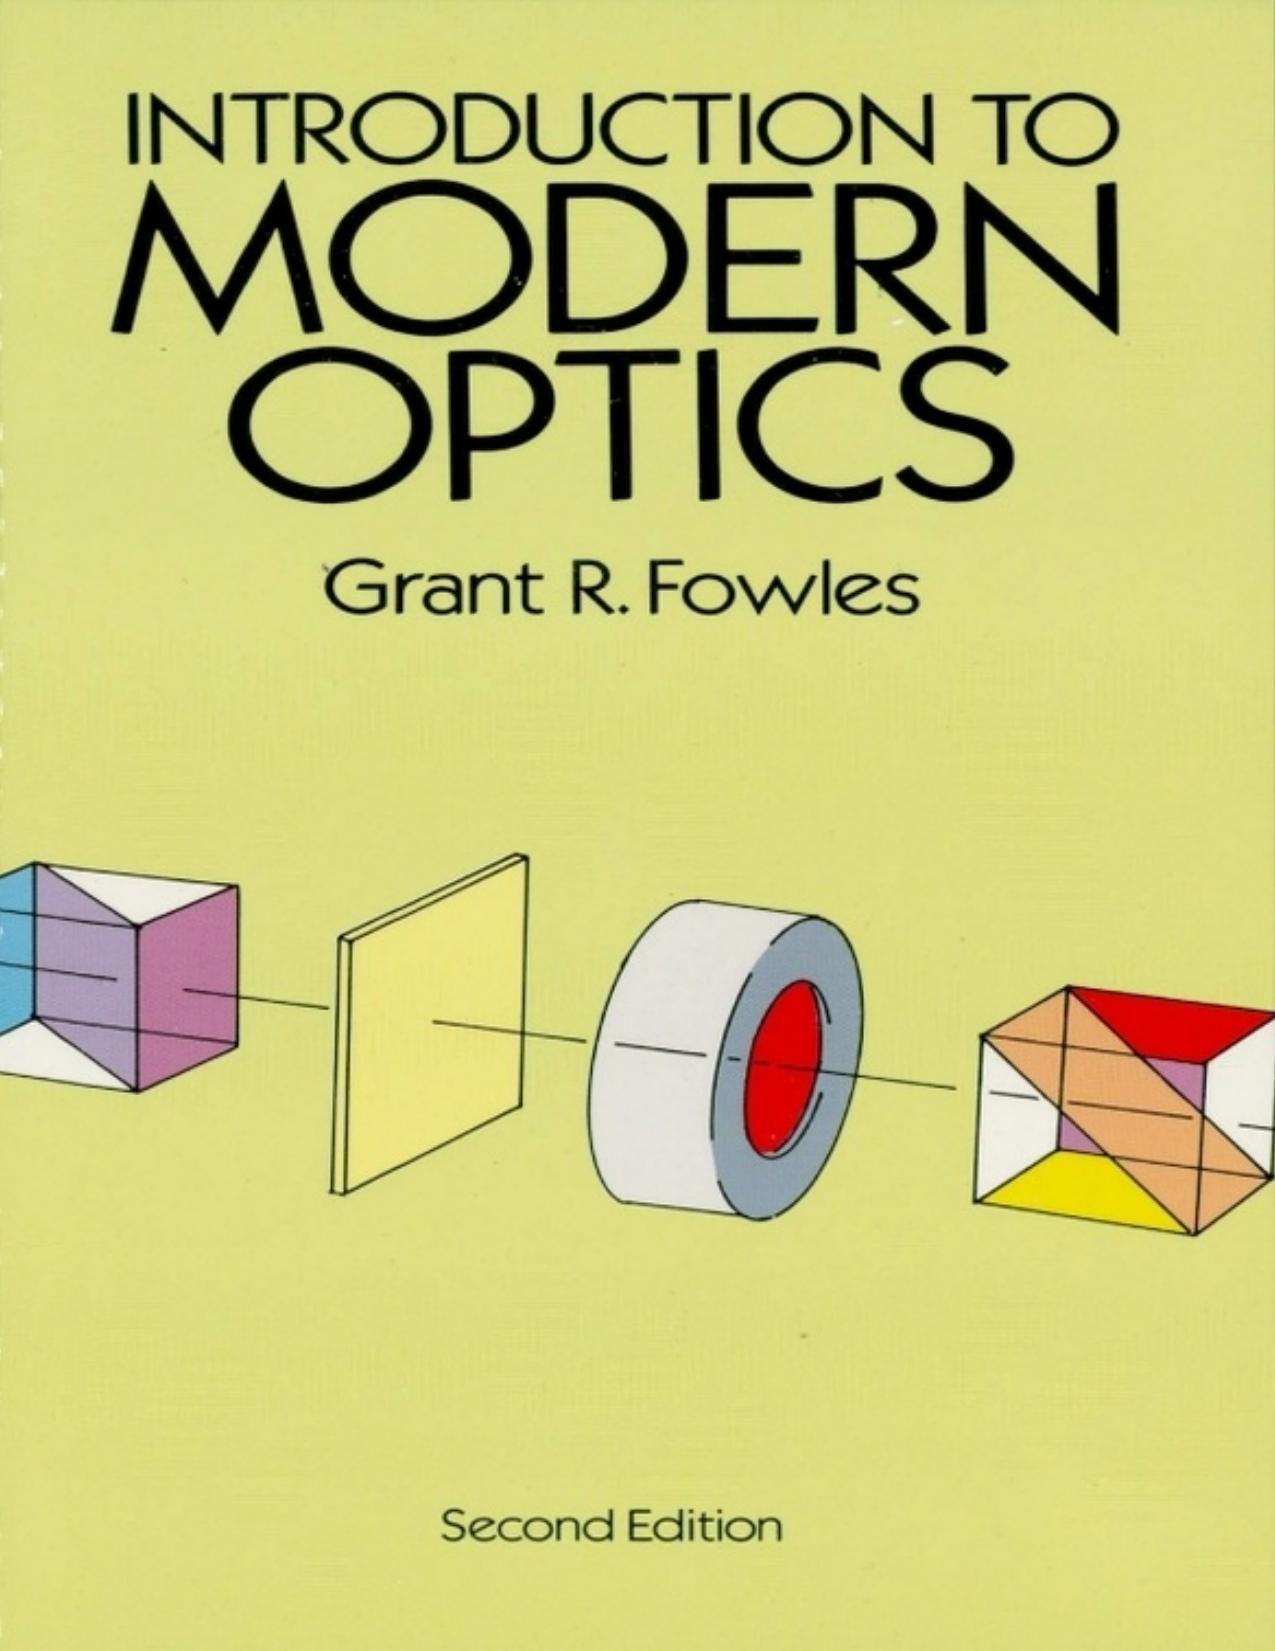 Introduction to Modern Optics - PDFDrive.com